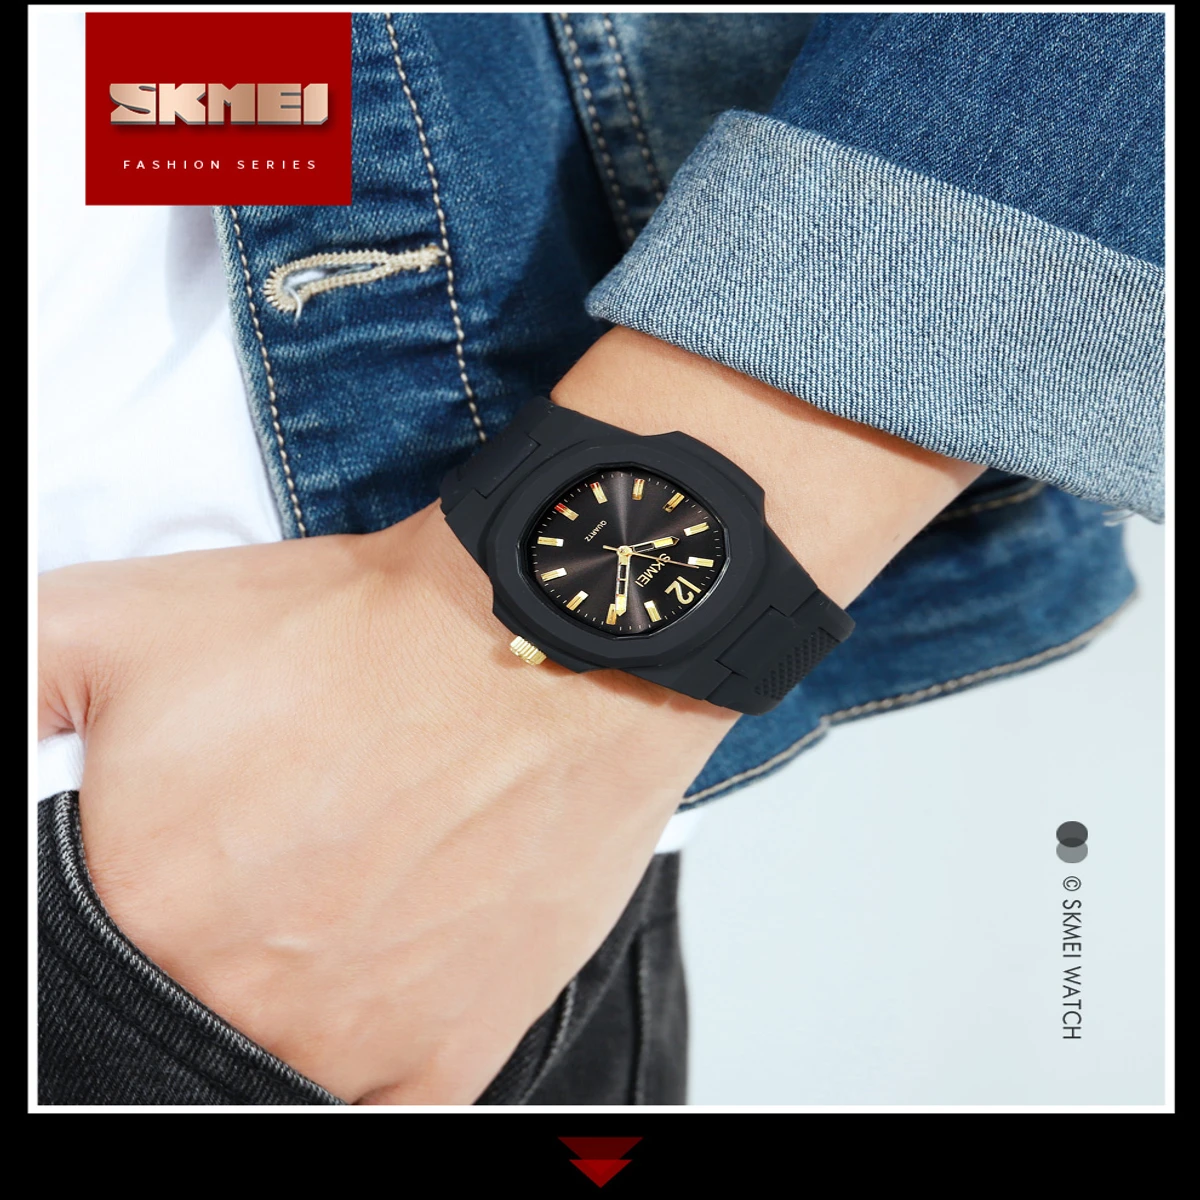 SKMEI Model 1717 Original Watch Retro Silicone Band Casual Analog Quartz Wristwatch 1717 Cool Watches Fashion Waterproof Sport Watch - Model 1717  skmei  Cooler black or golden dial